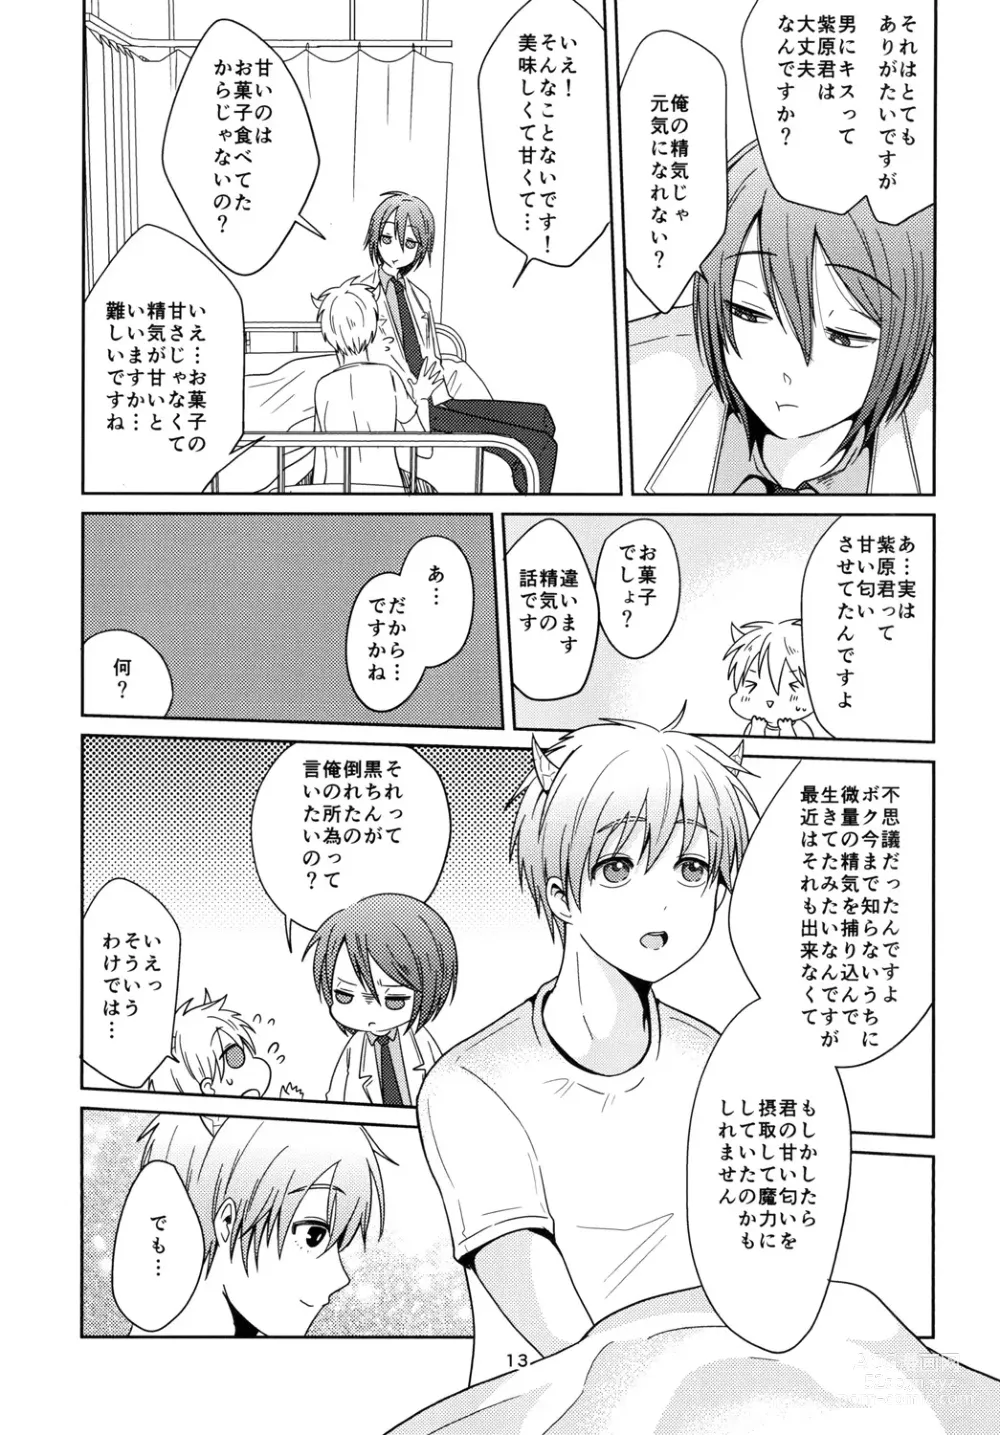 Page 13 of doujinshi Tenshi Nante Yobanaide